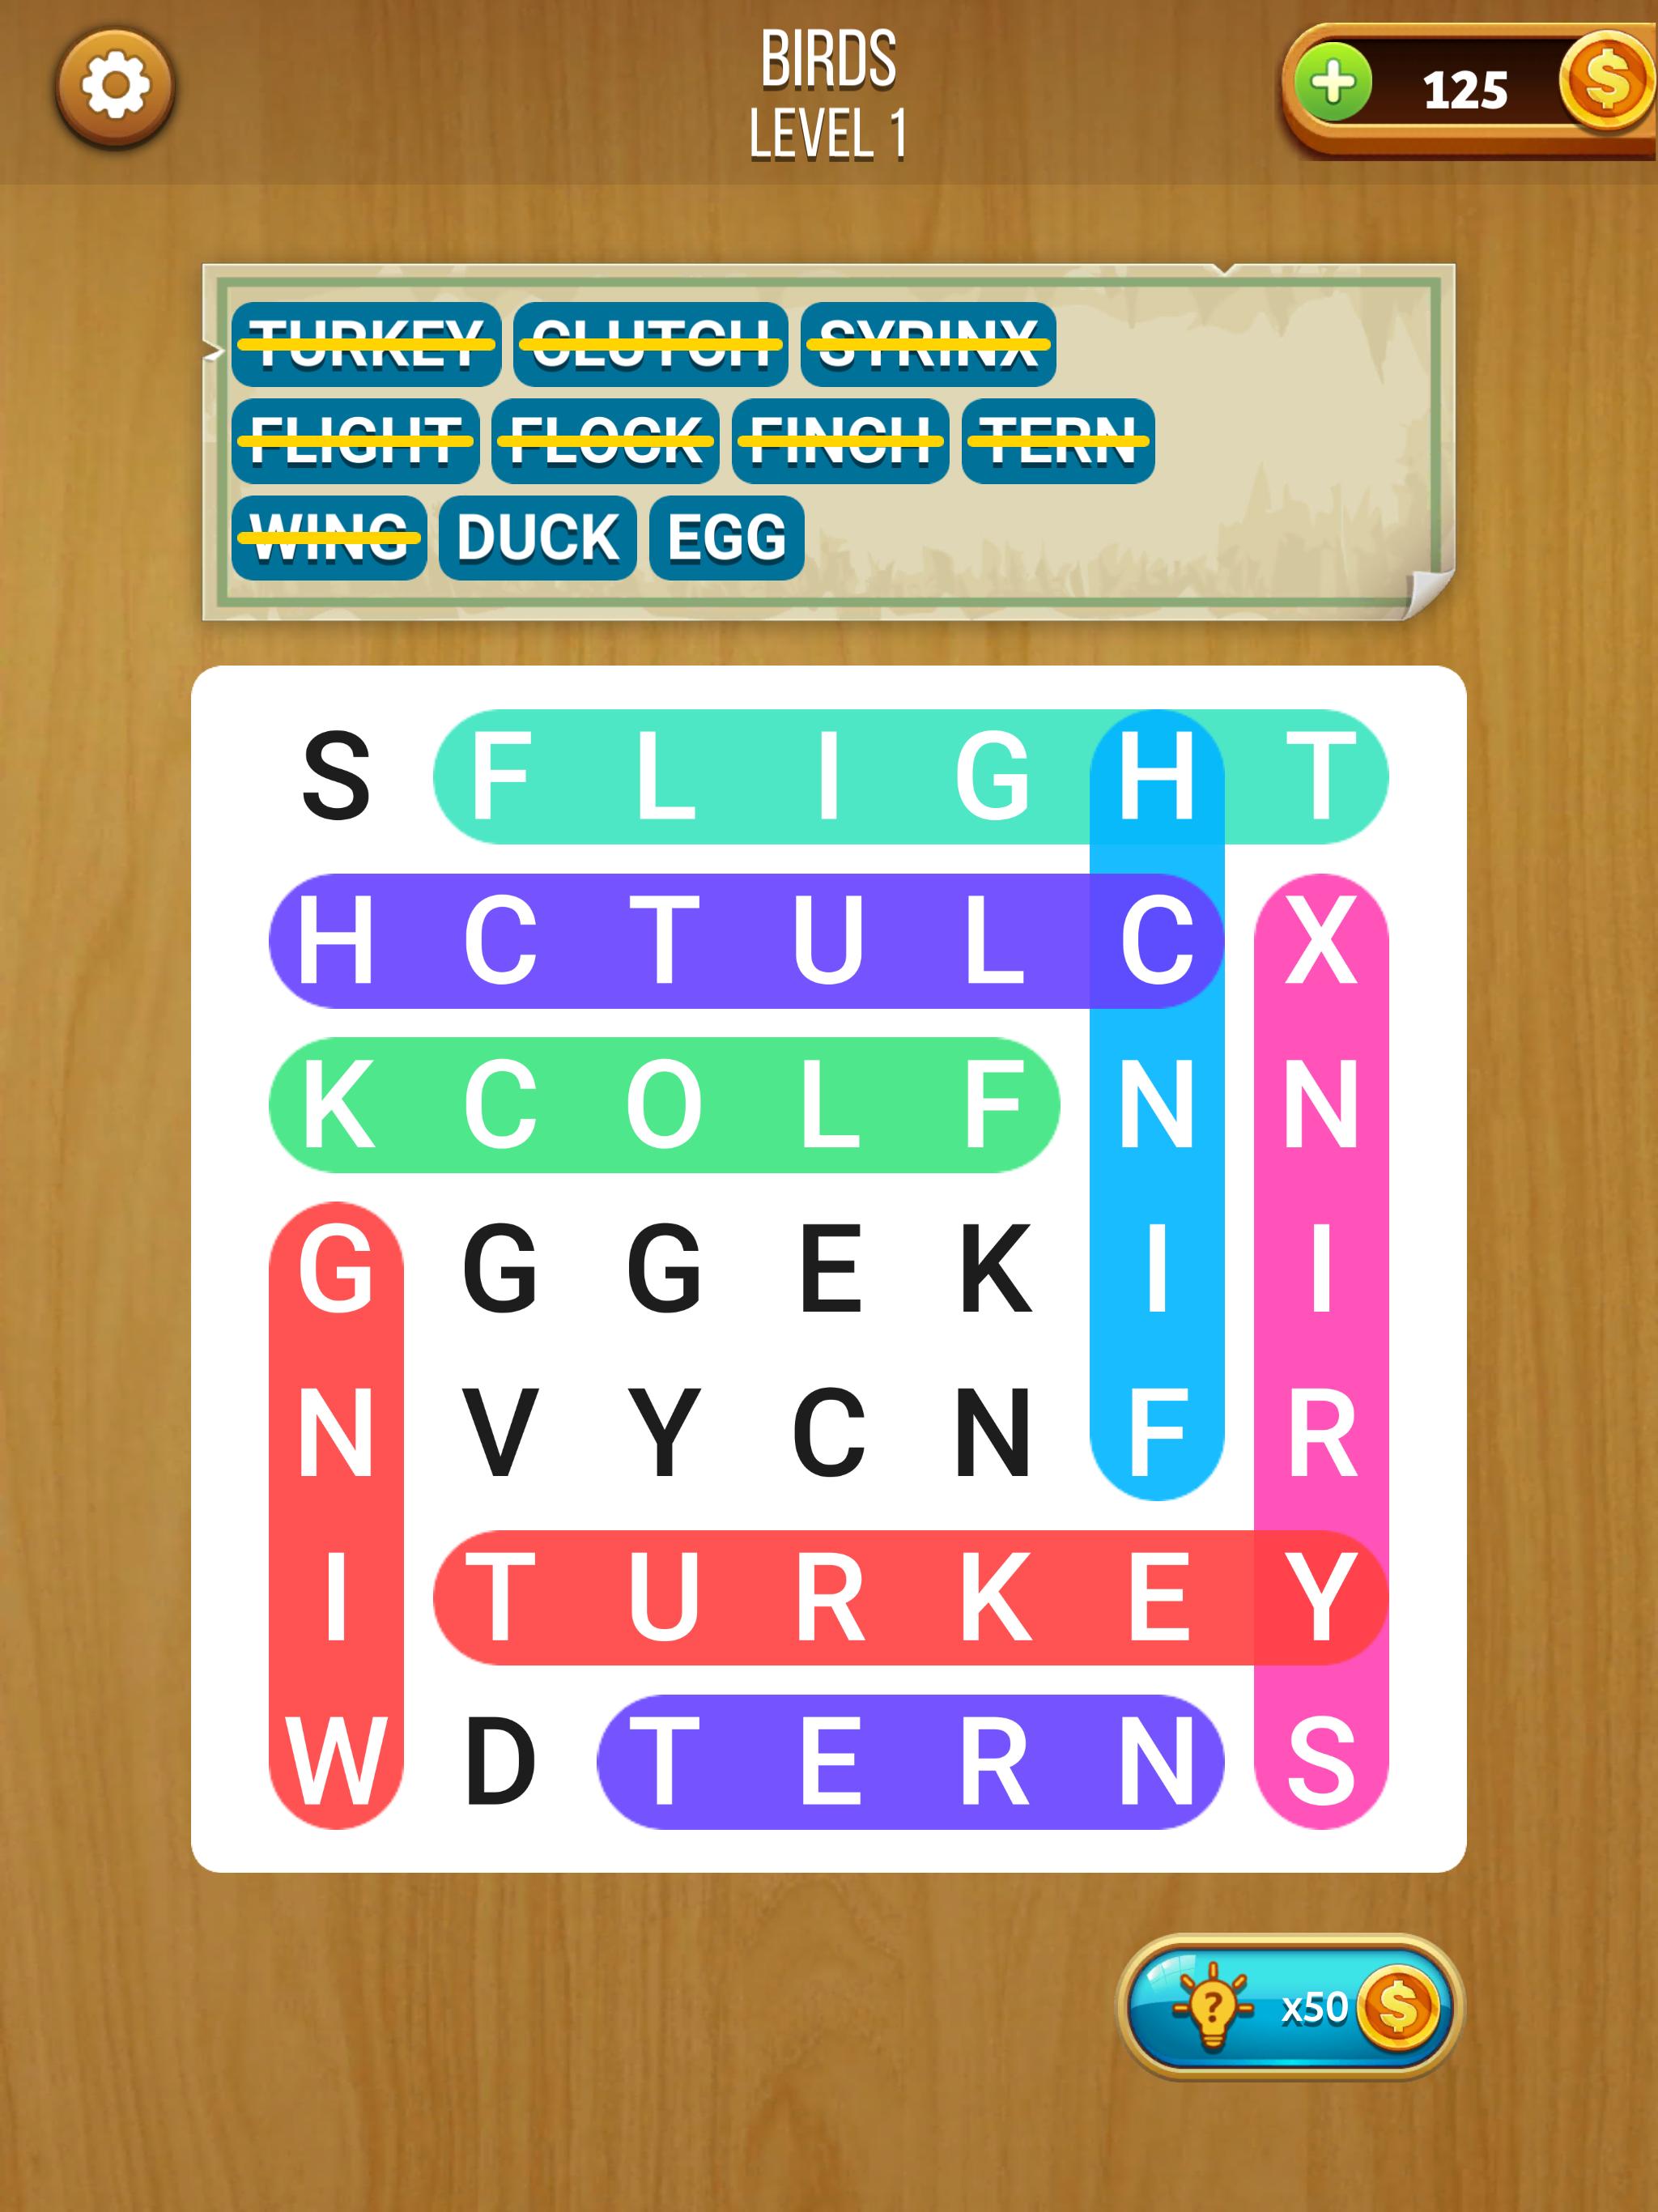 Hidden Words Word Search CrossWord Fun Game 1.0.1 Screenshot 9